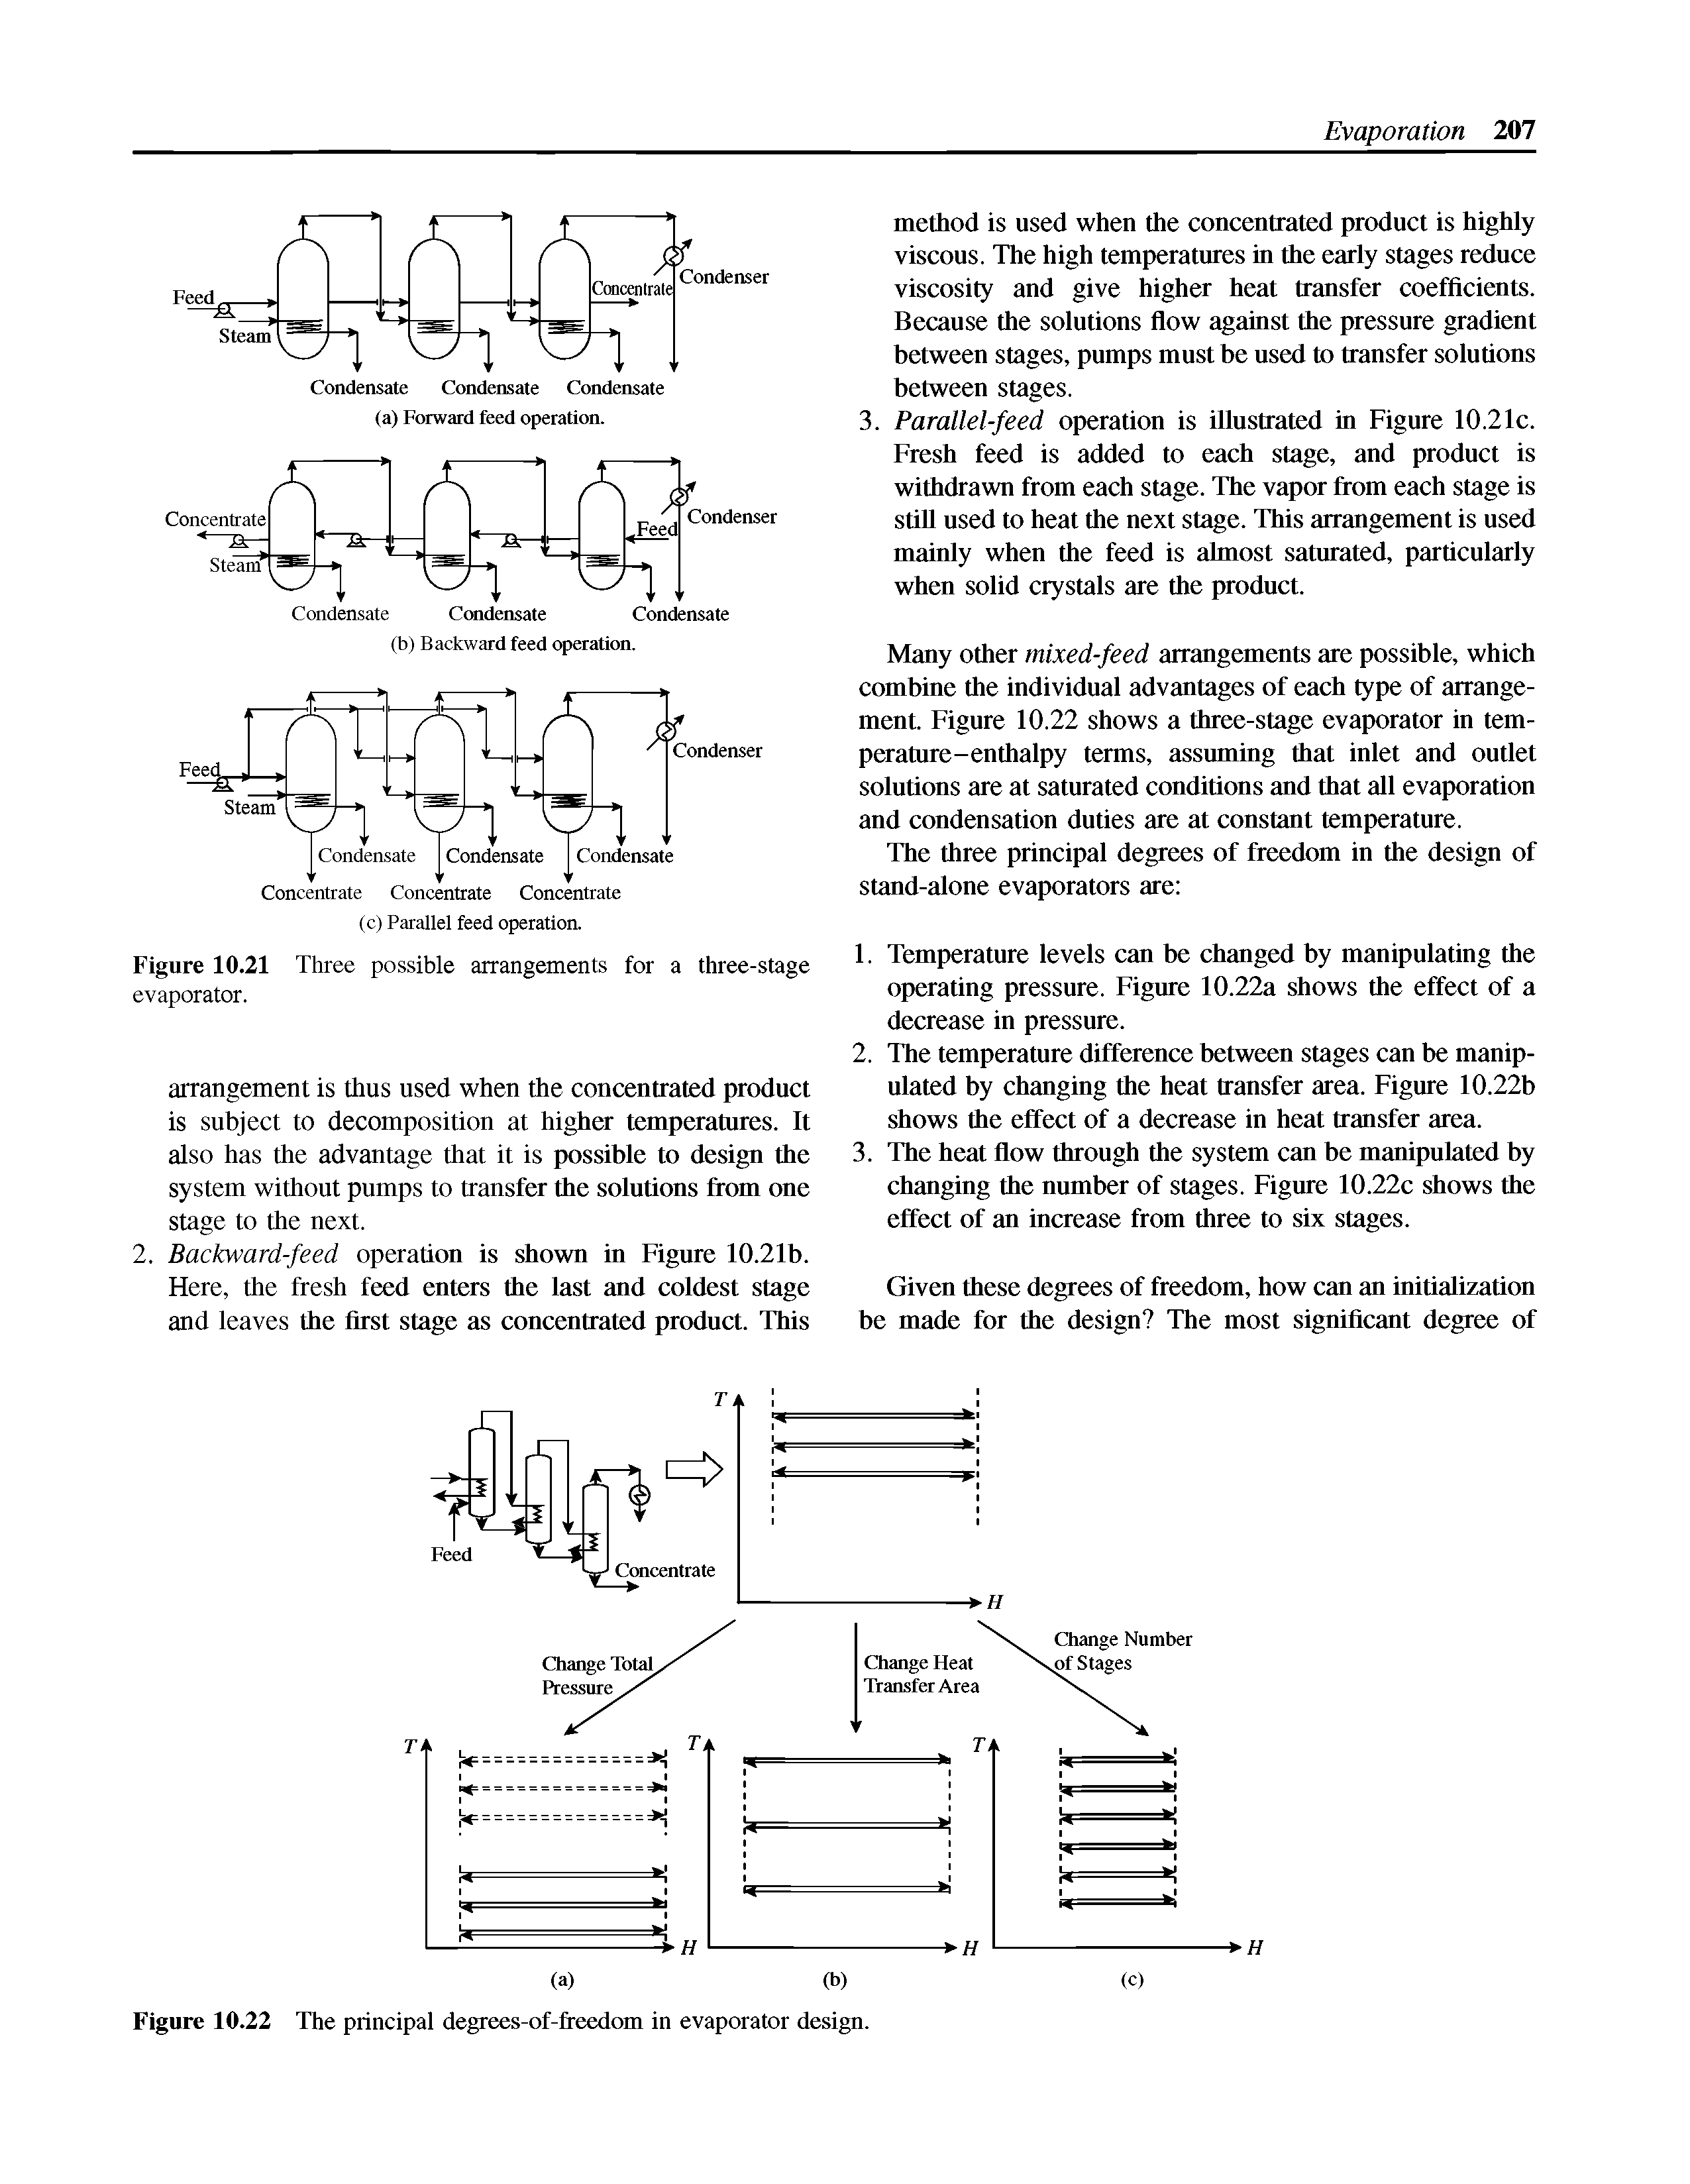 Figure 10.22 The principal degrees-of-freedom in evaporator design.